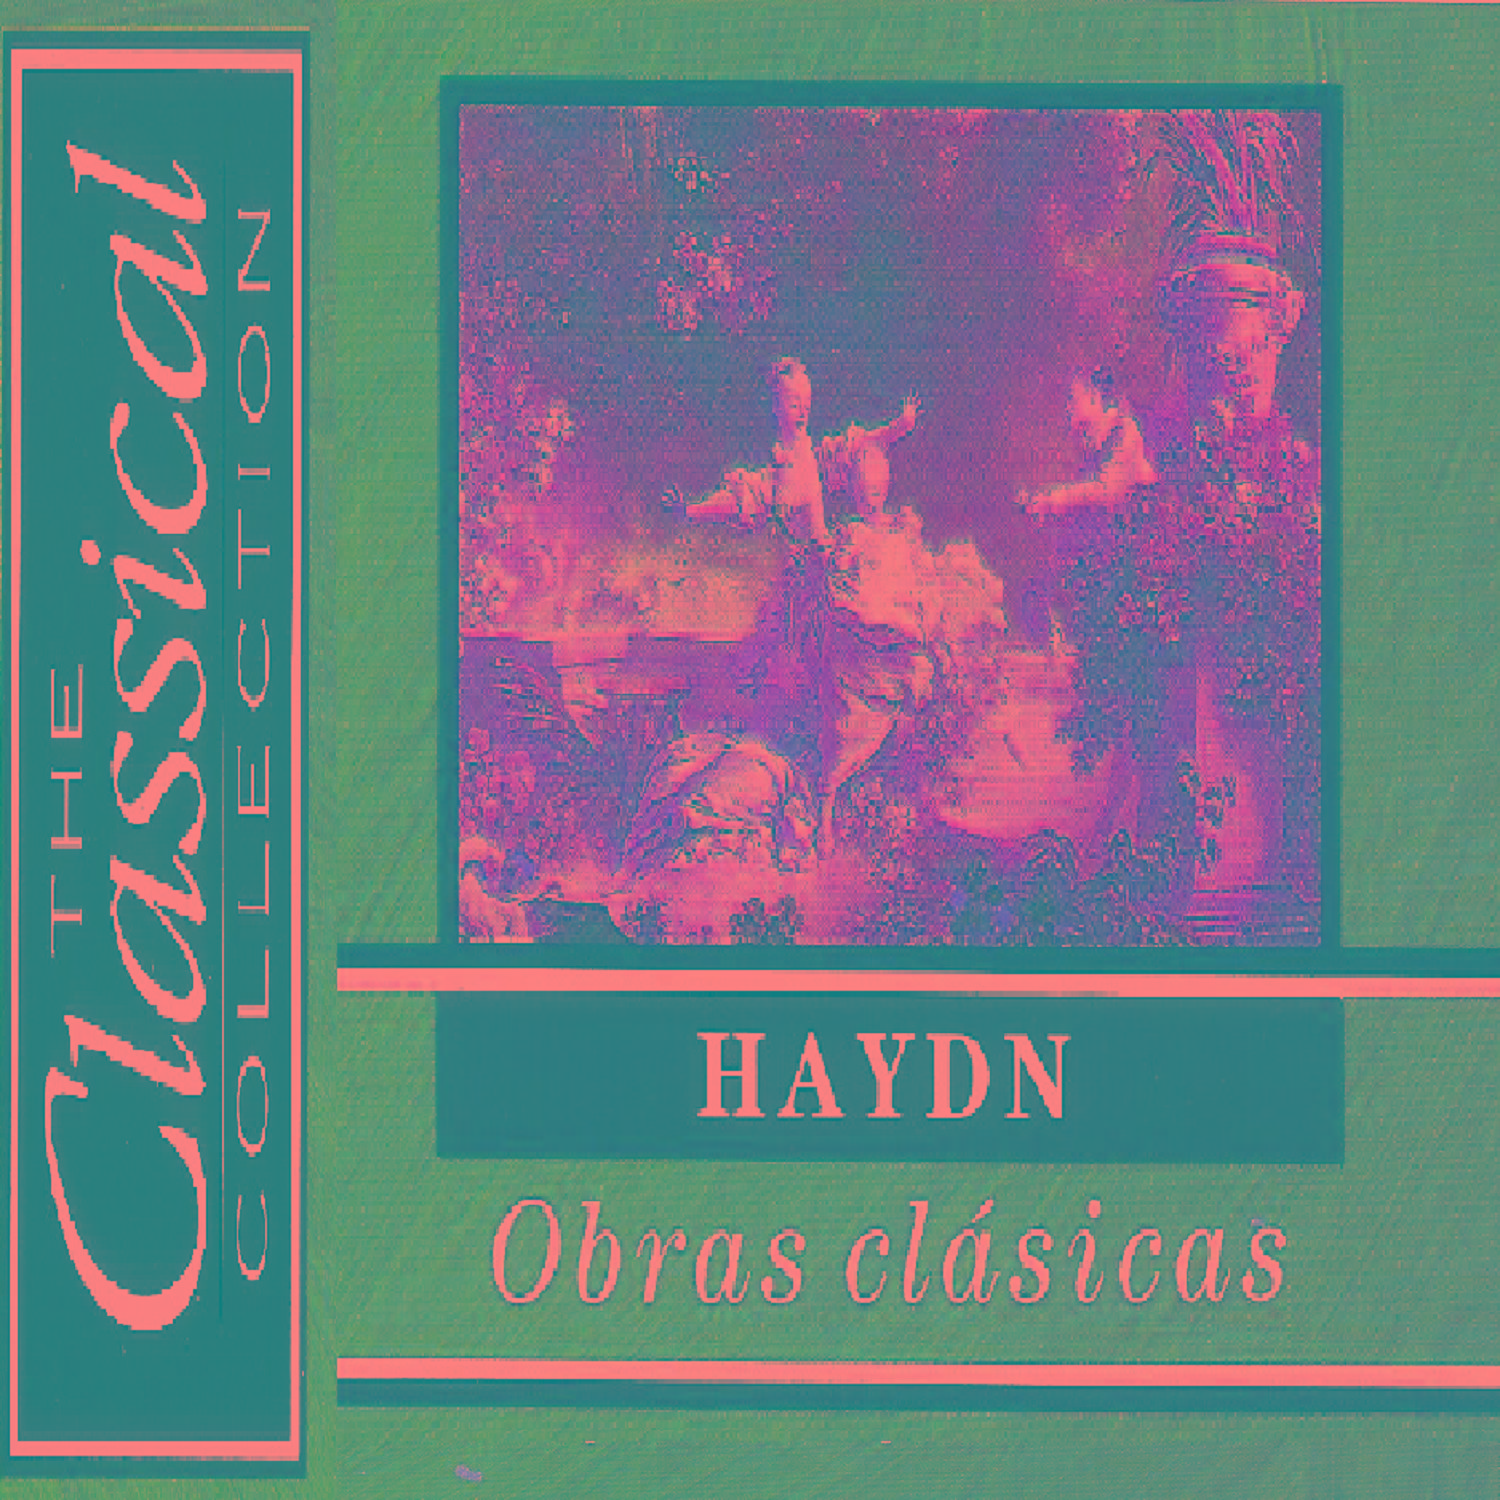 The Classical Collection - Haydn - Obras clásicas